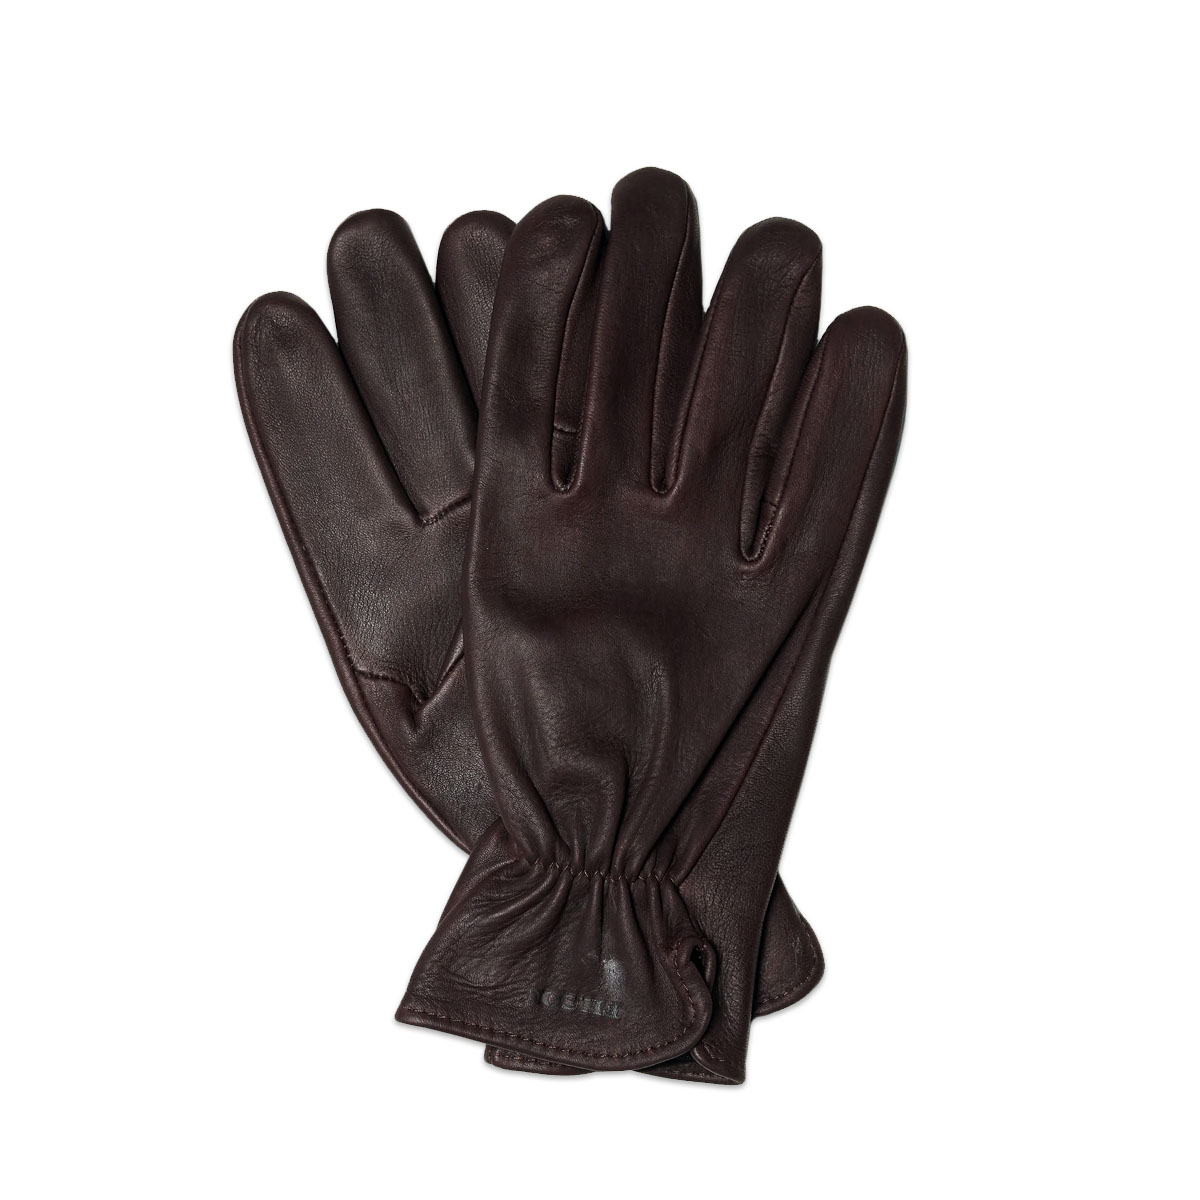 Filson Original Deerskin Gloves 11062020-Brown, soft, versatile gloves made from midweight, Grade-A deerskin